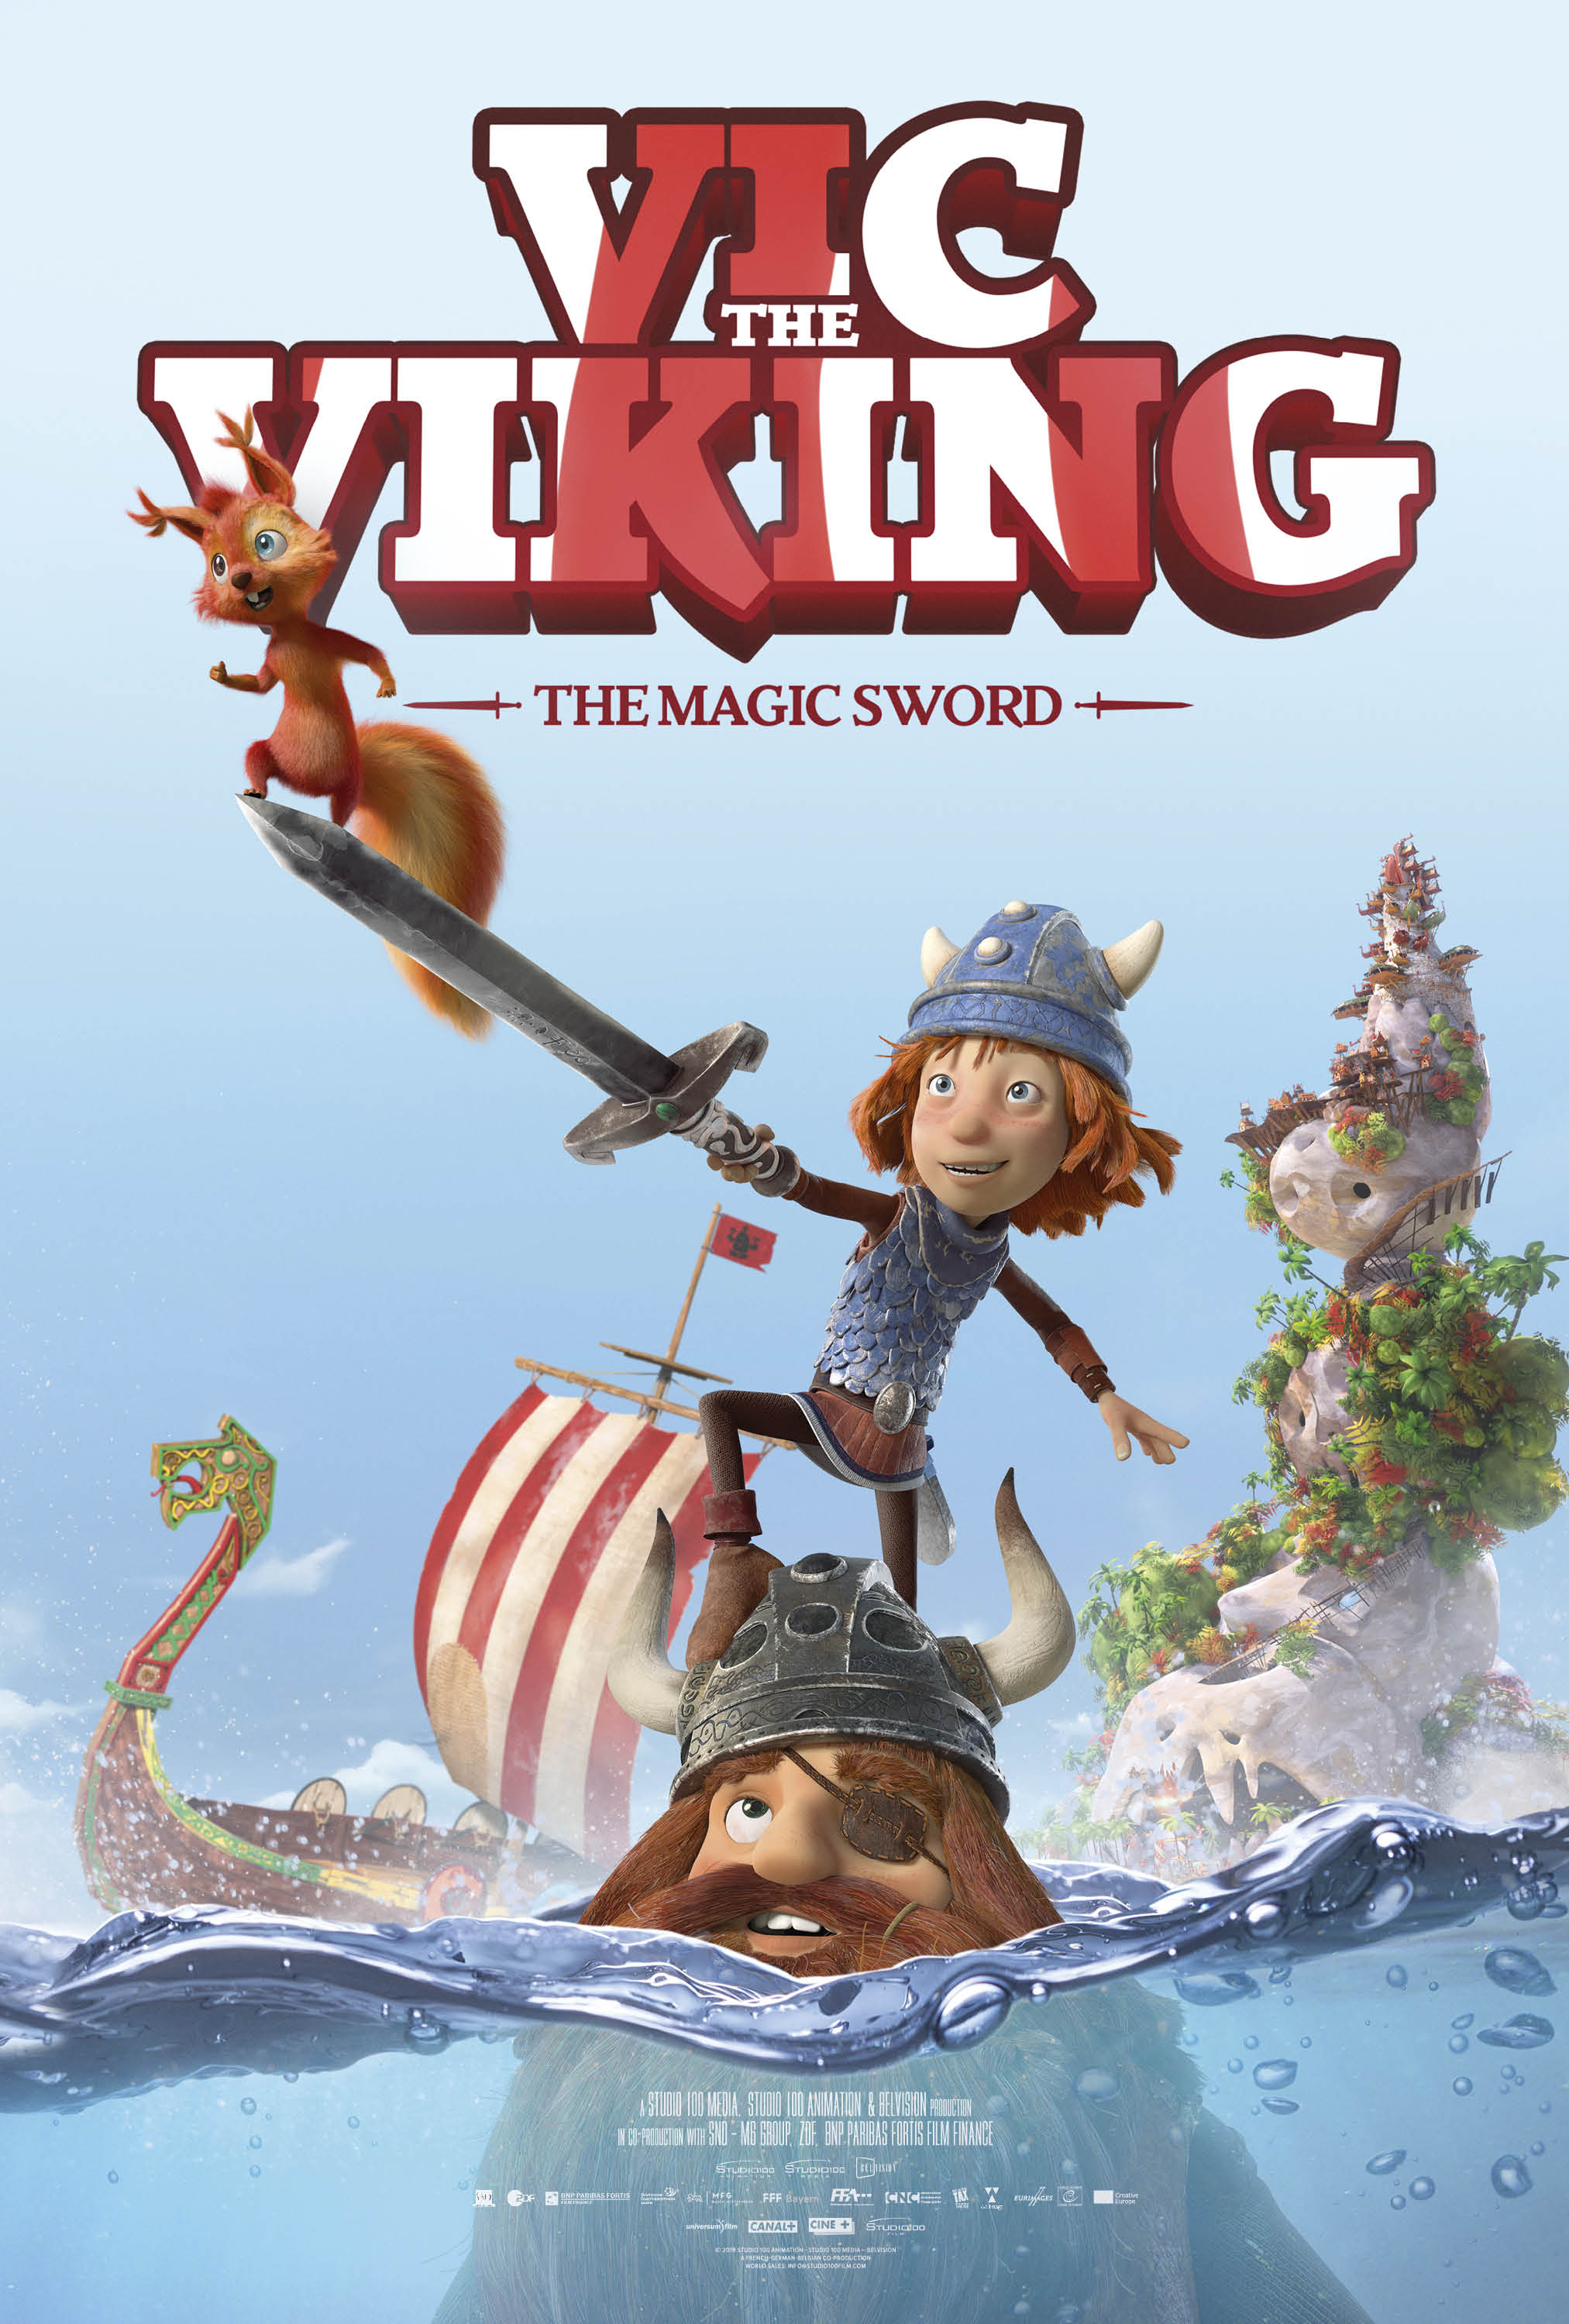 Vic, a viking online